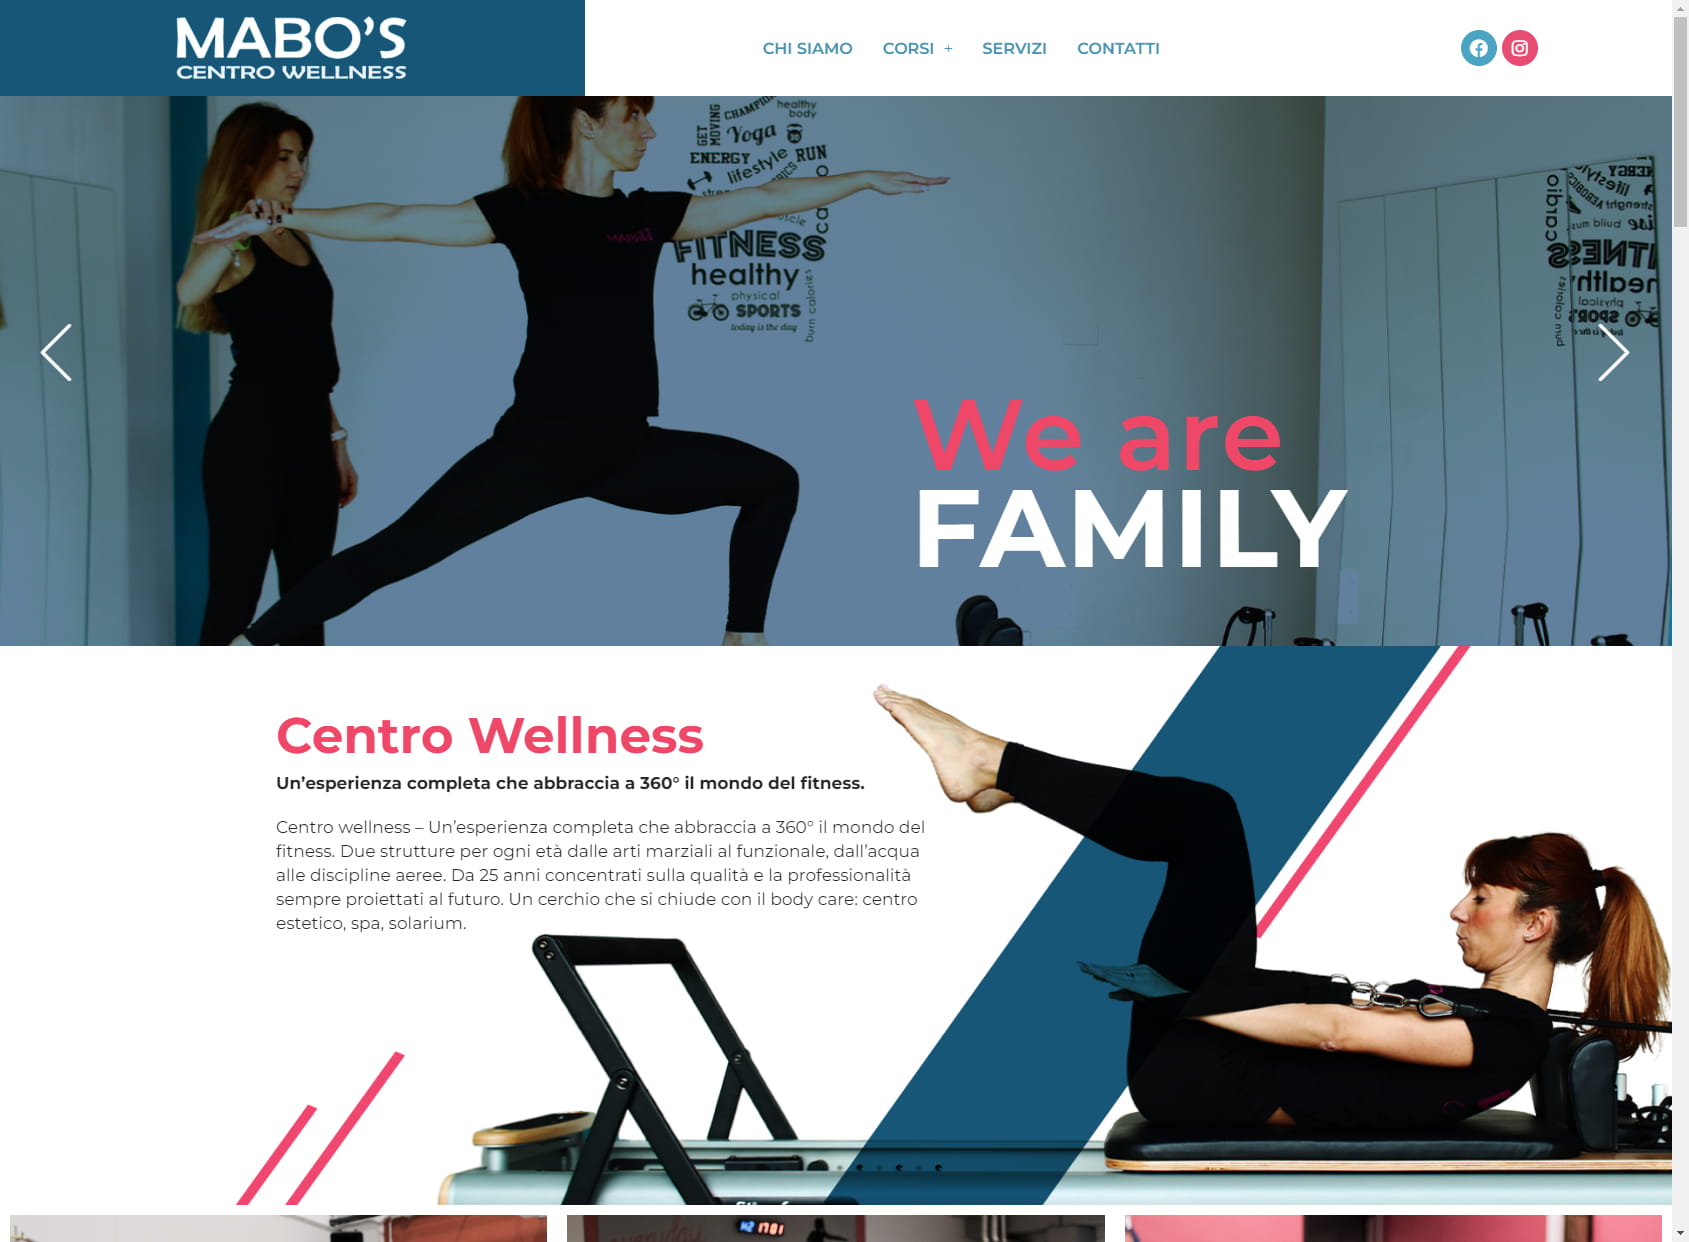 Mabo's Centro Wellness